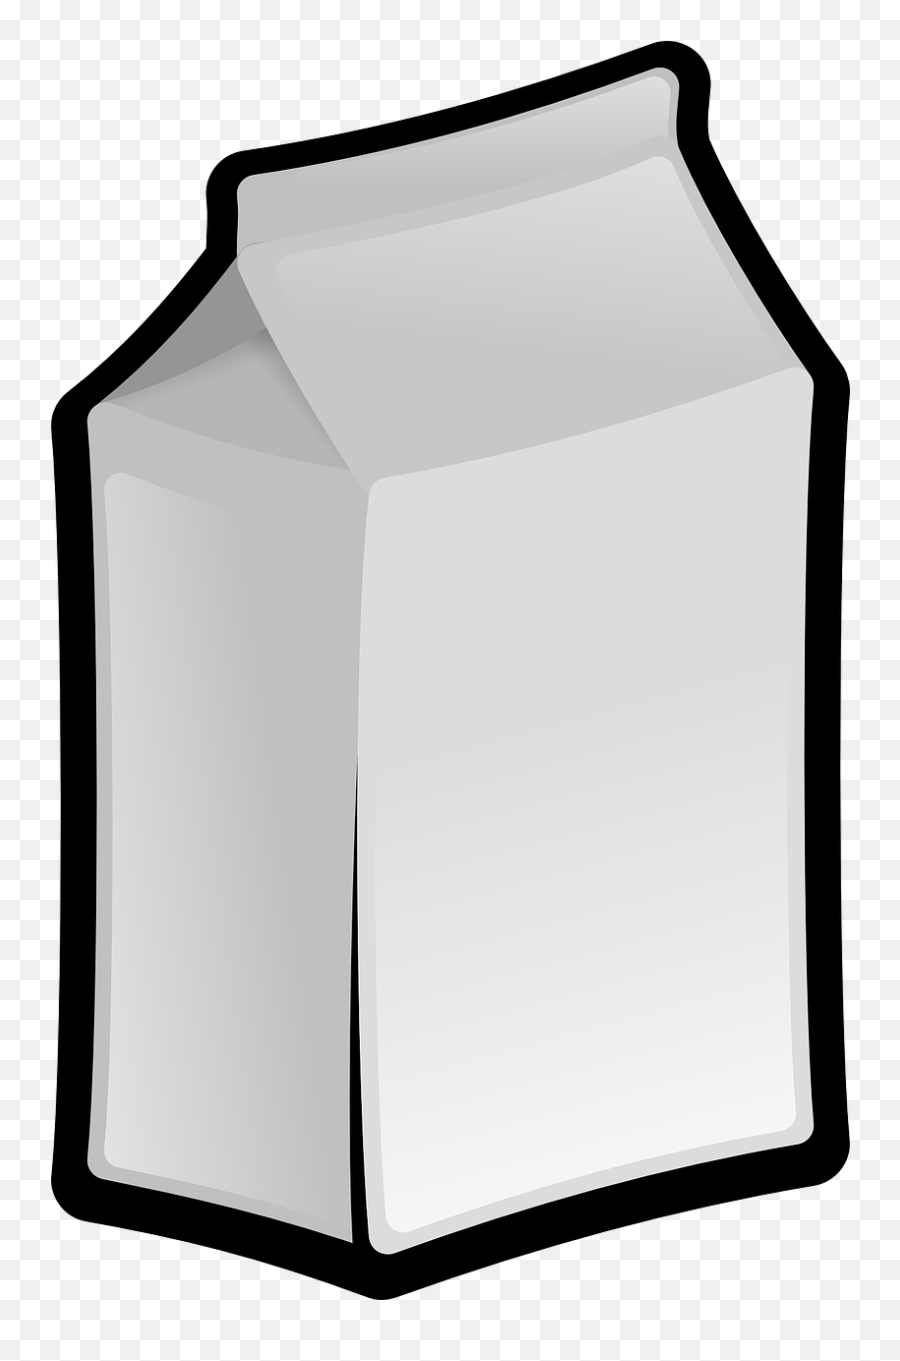 Milk Carton White - Free Vector Graphic On Pixabay Milk Box Png,White Box Png